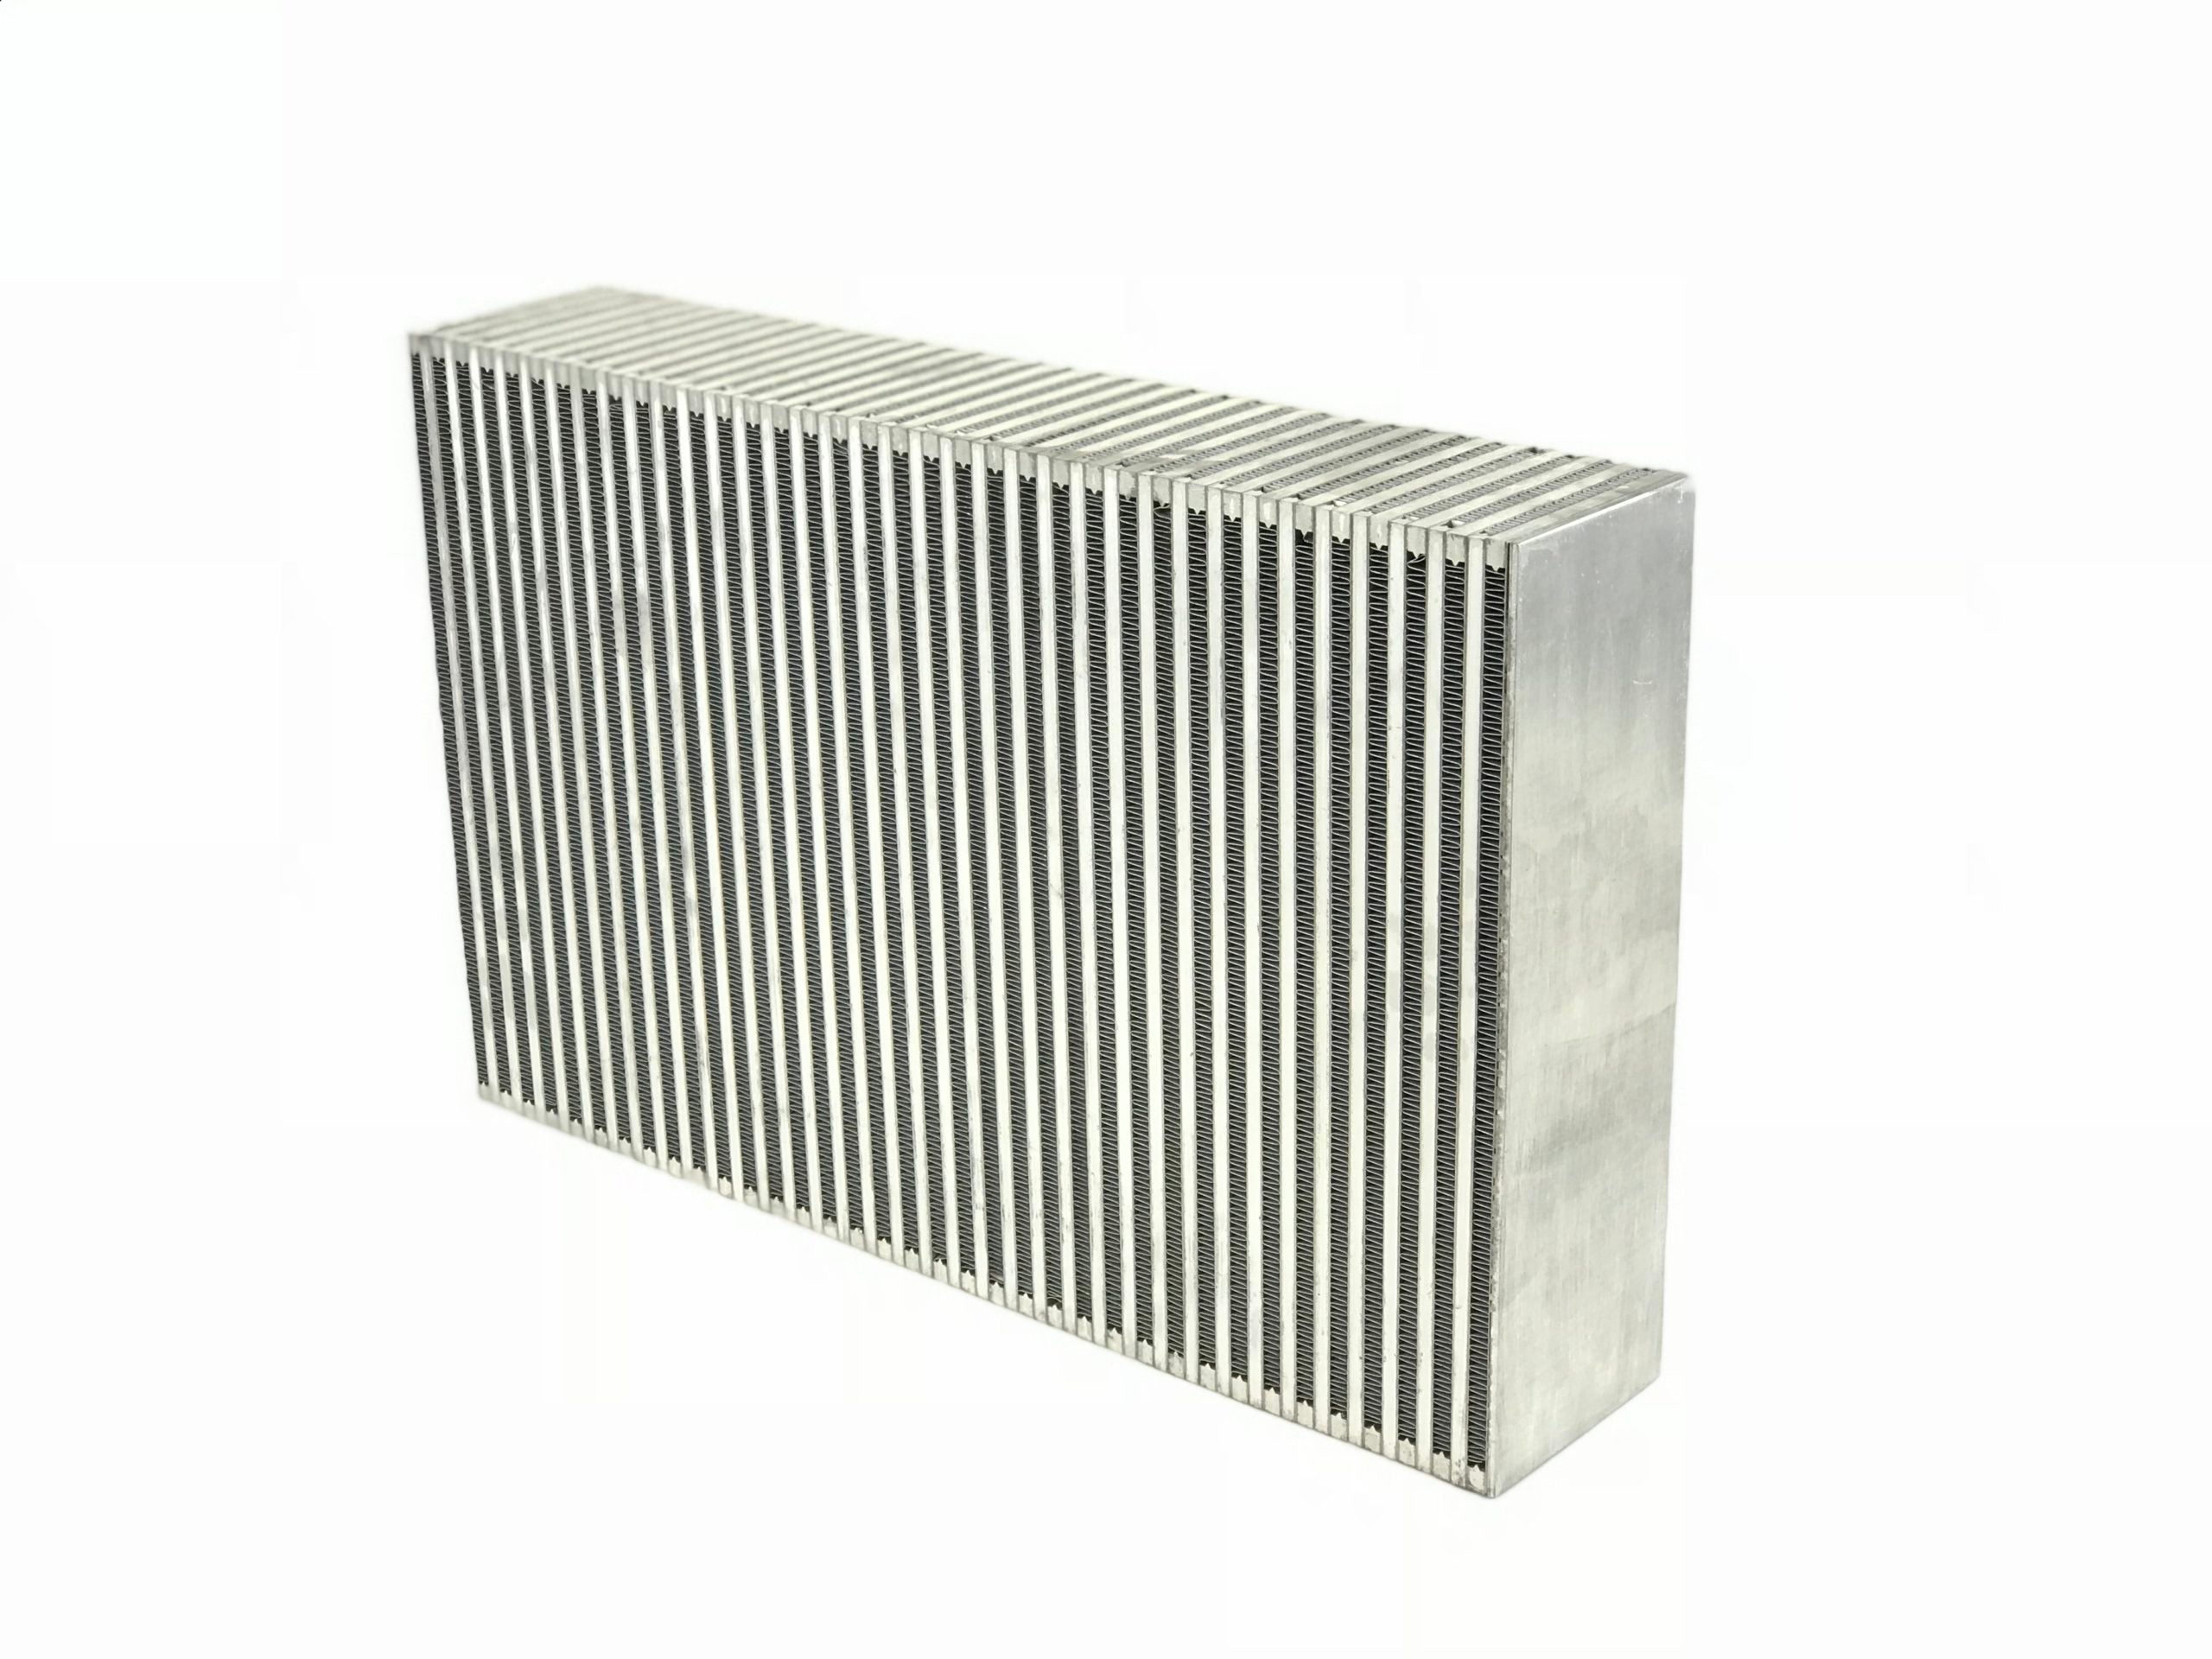 CSF 8117W High Performance Bar&plate intercooler core 22x14Hx5.5 (Vertical Flow) for NISSAN GT-R (R35) 2009- Photo-1 